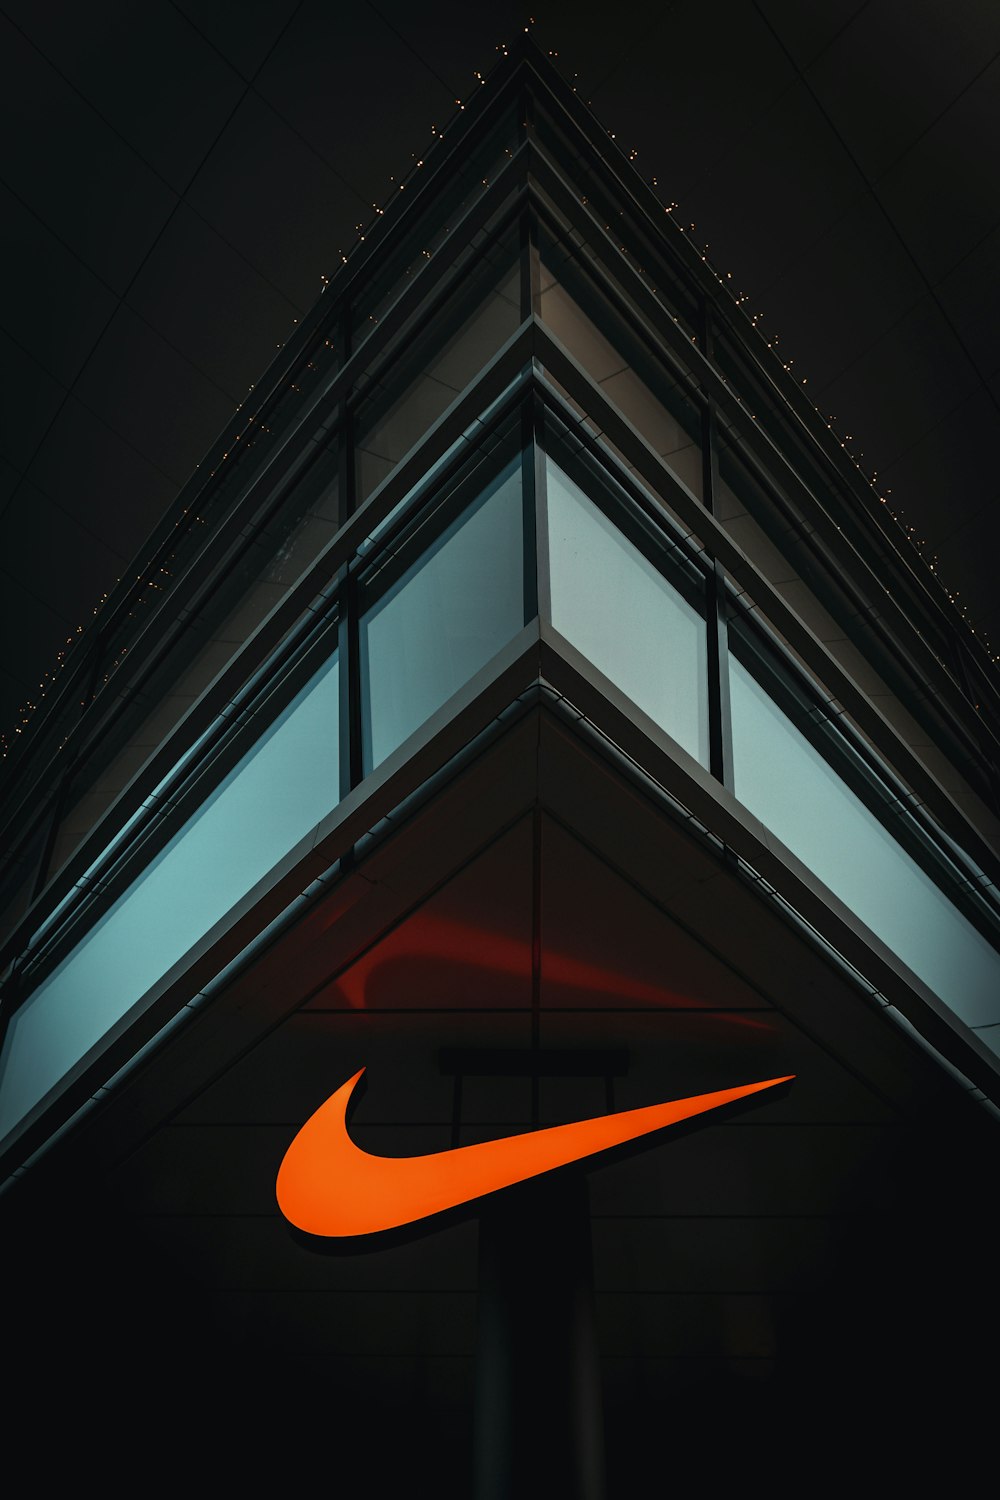 Middelen smokkel terwijl 500+ Best Nike Pictures [HD] | Download Free Images on Unsplash